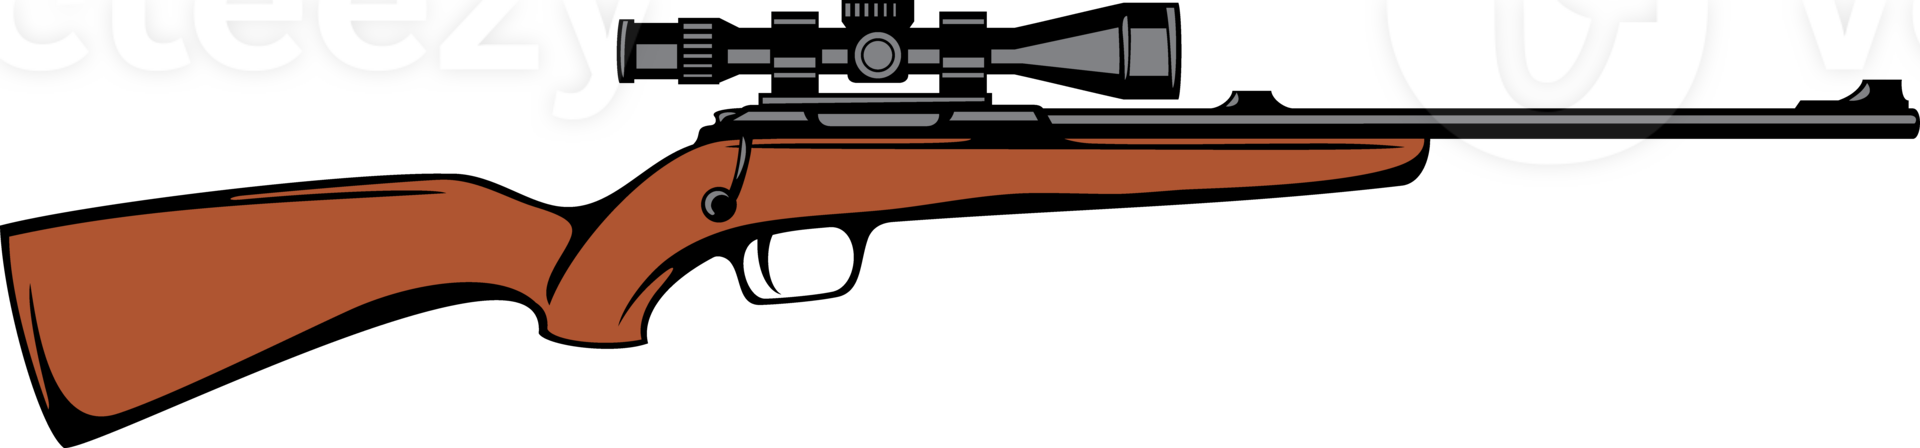 jakt gevär med teleskopisk syn. prickskytt png illustration.